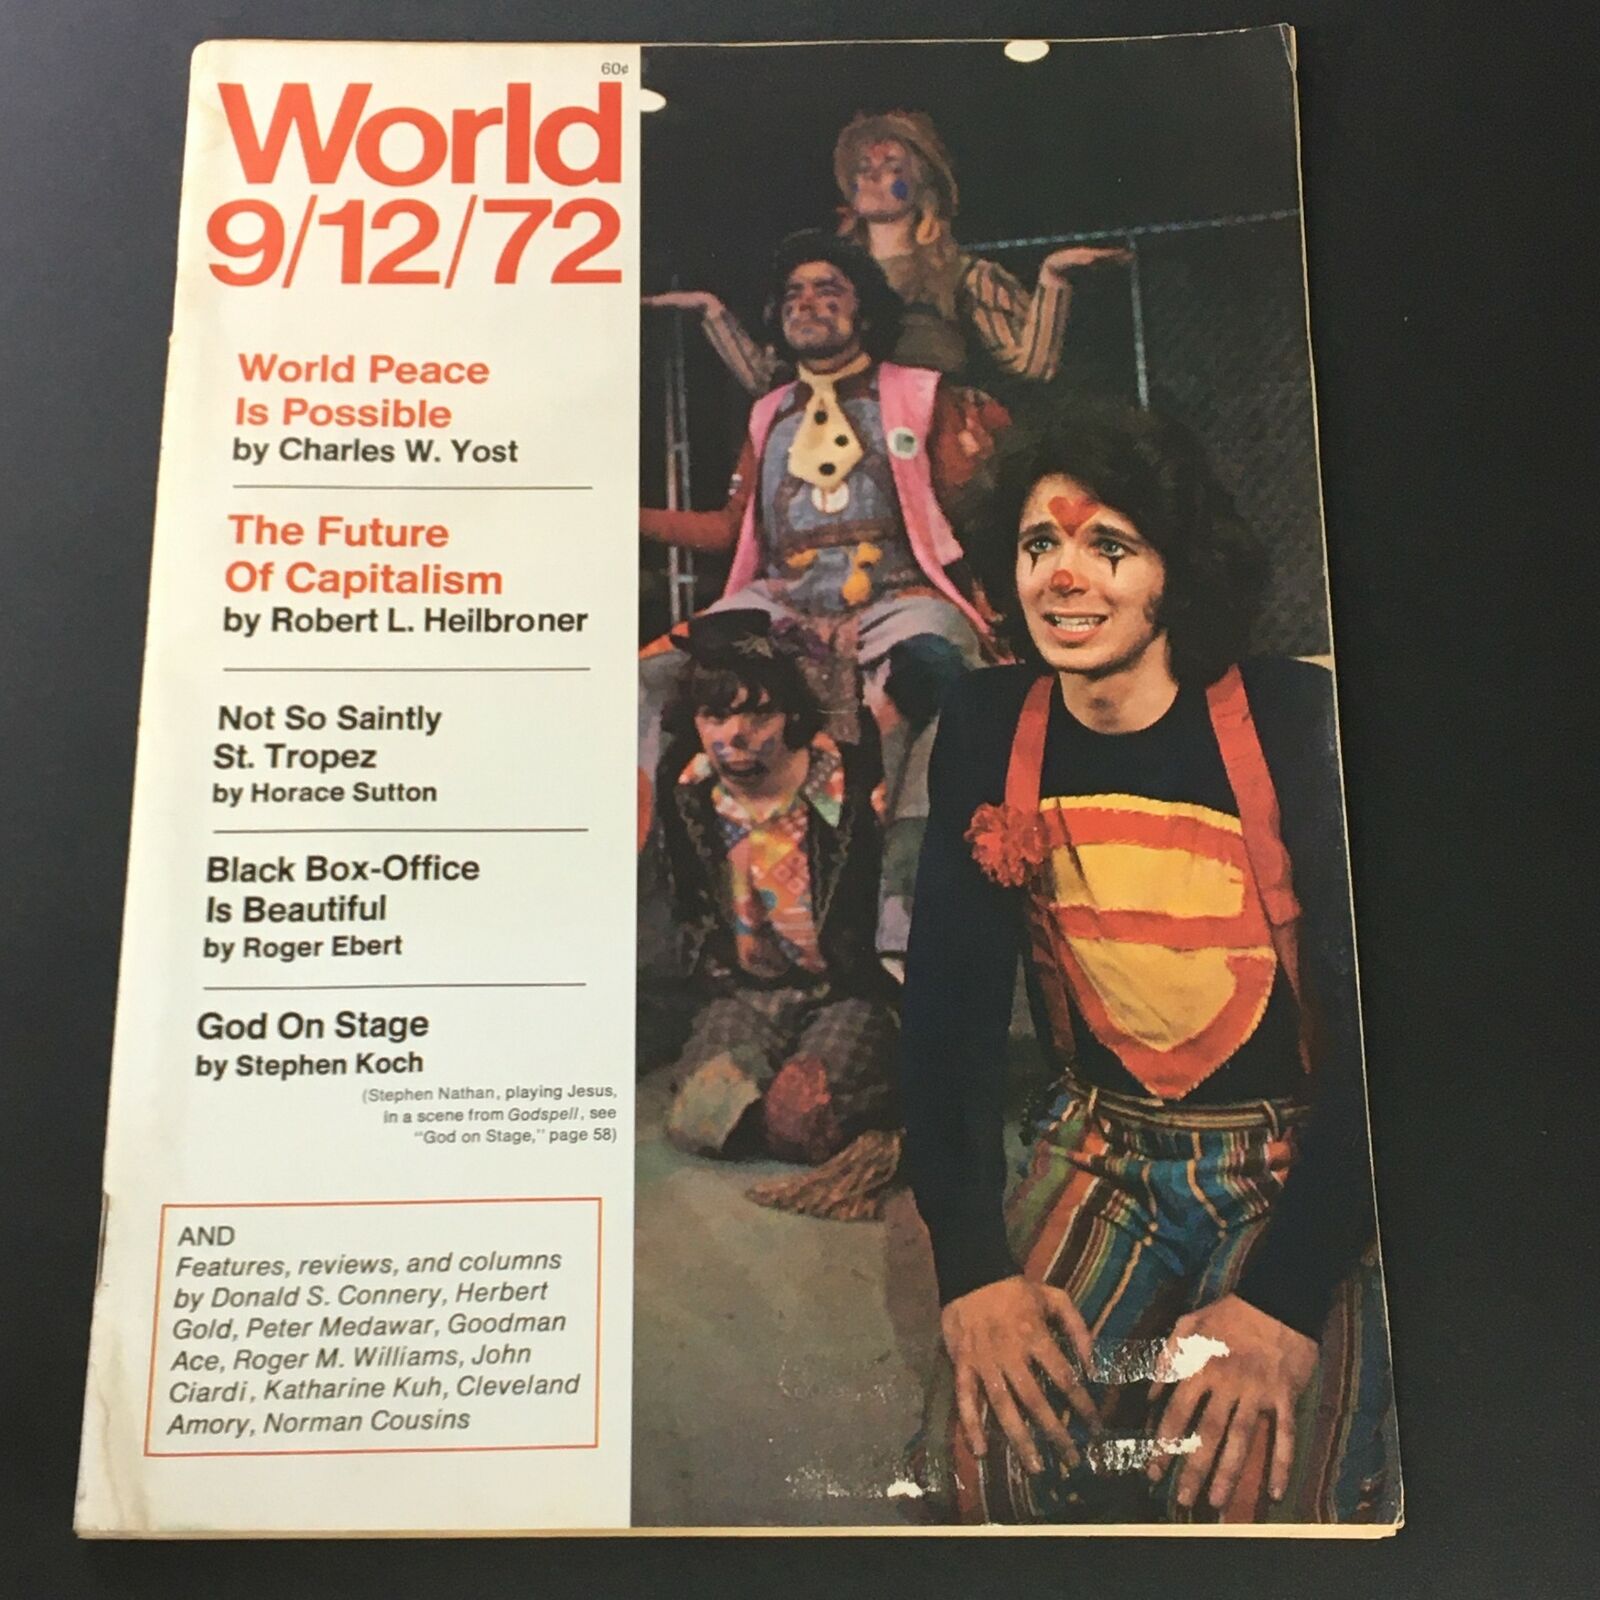 VTG World Magazine September 12 1972 Vol 1 #6 The Future of Capitalism